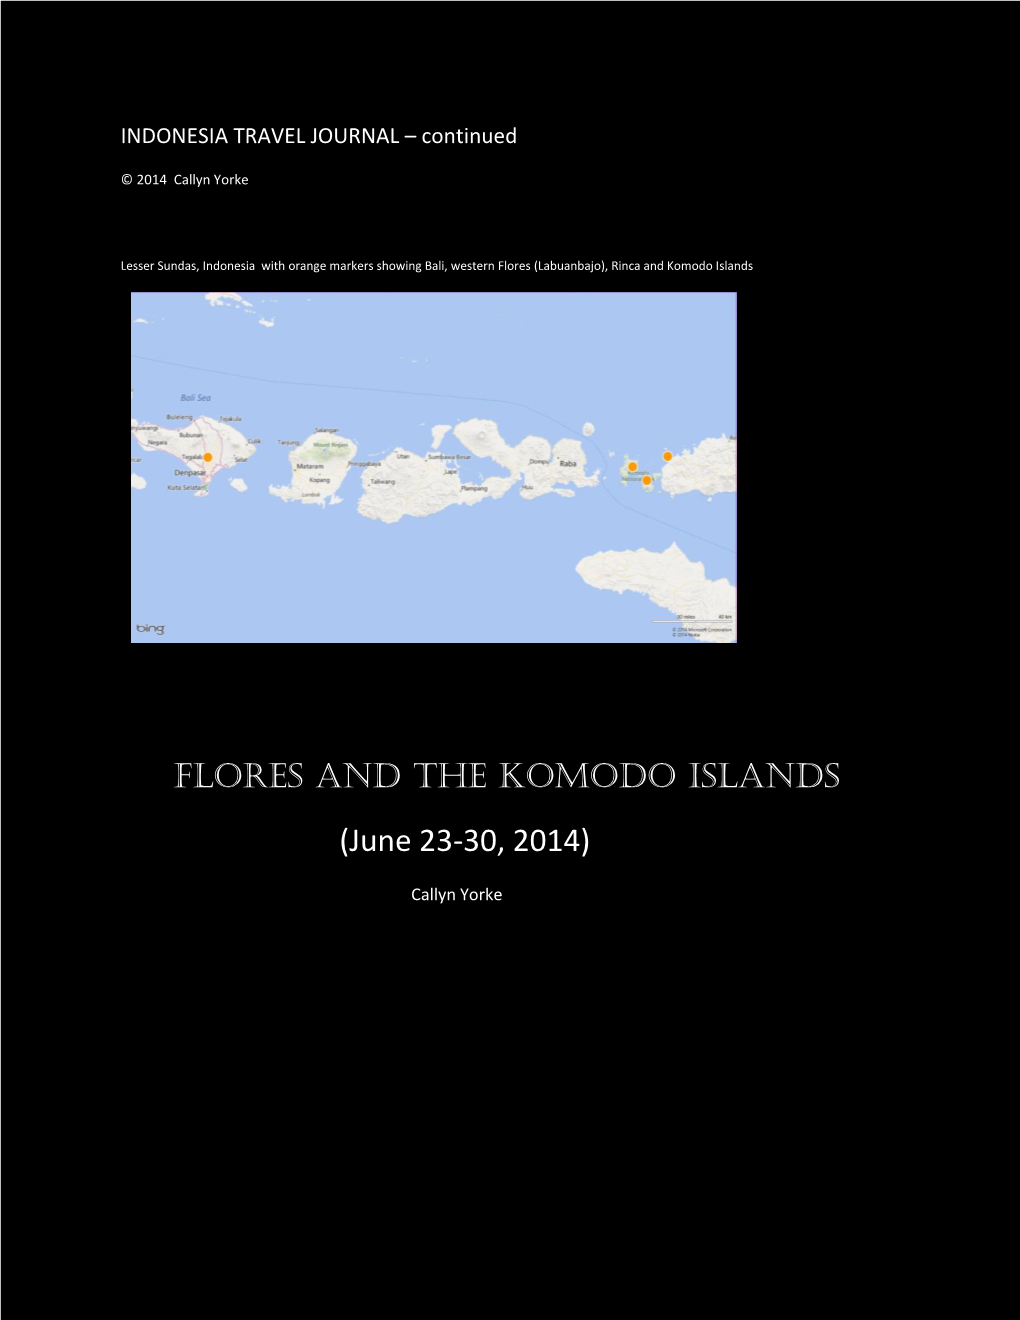 FLORES and the KOMODO ISLANDS (June 23-30, 2014)